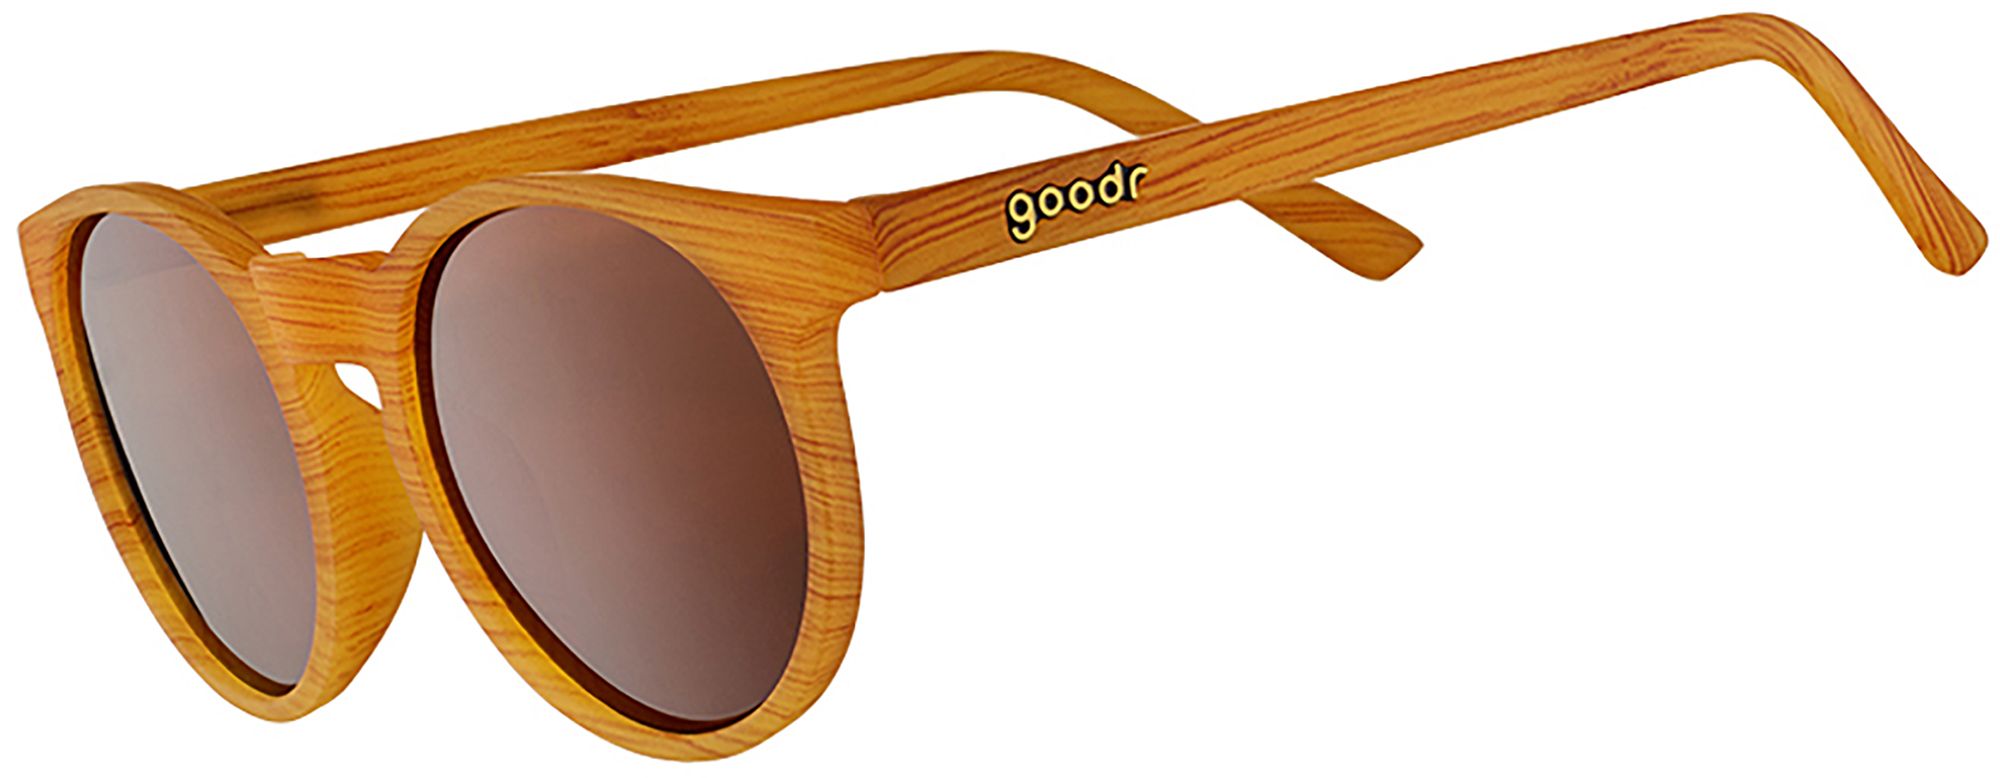 Photos - Sunglasses Goodr Bodhis Ultimate Ride Polarized , Men's, Brown/Brown 24AVJA